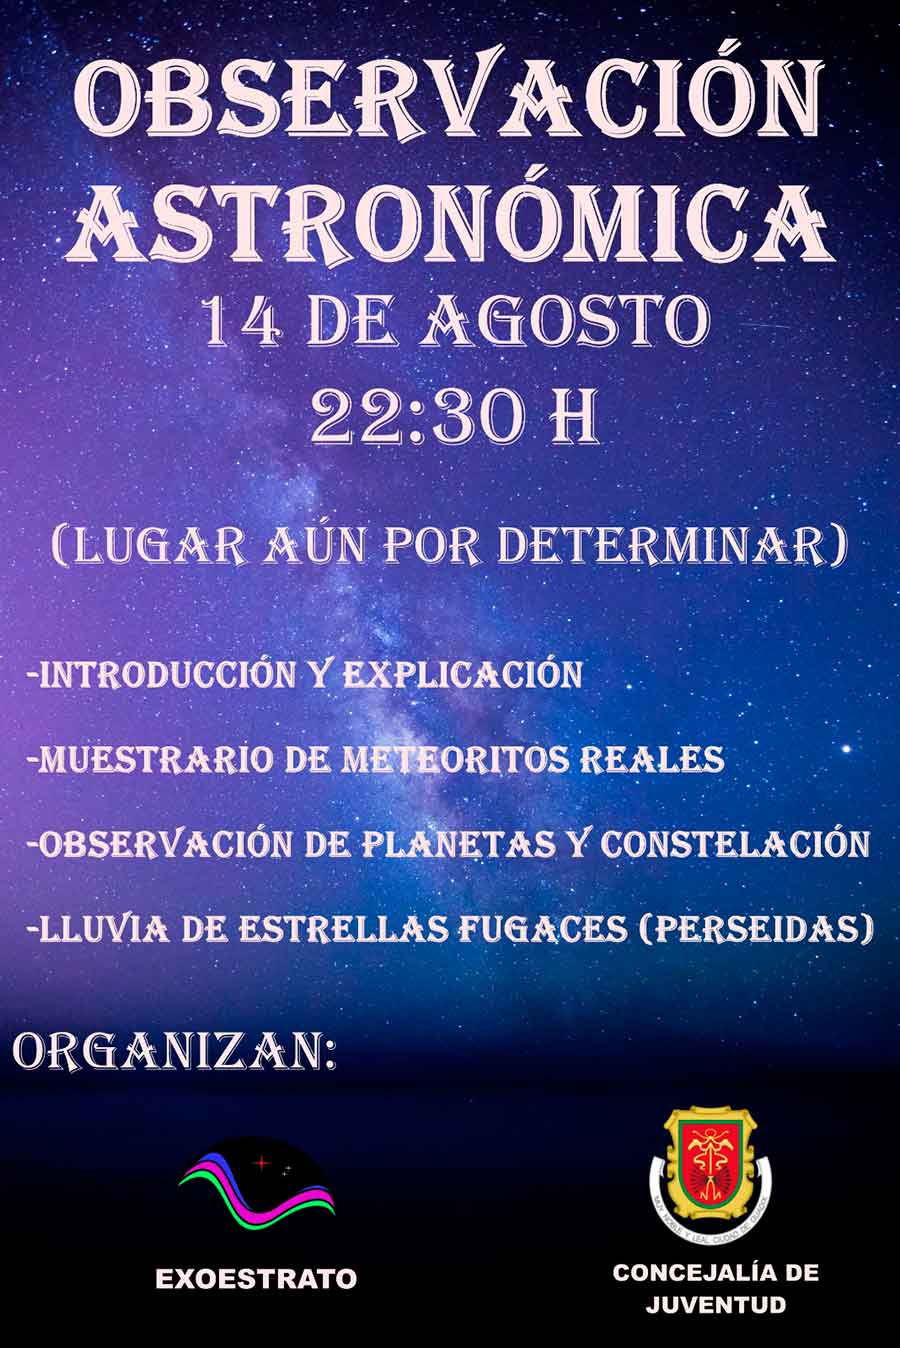 Observación astronómica Guadix